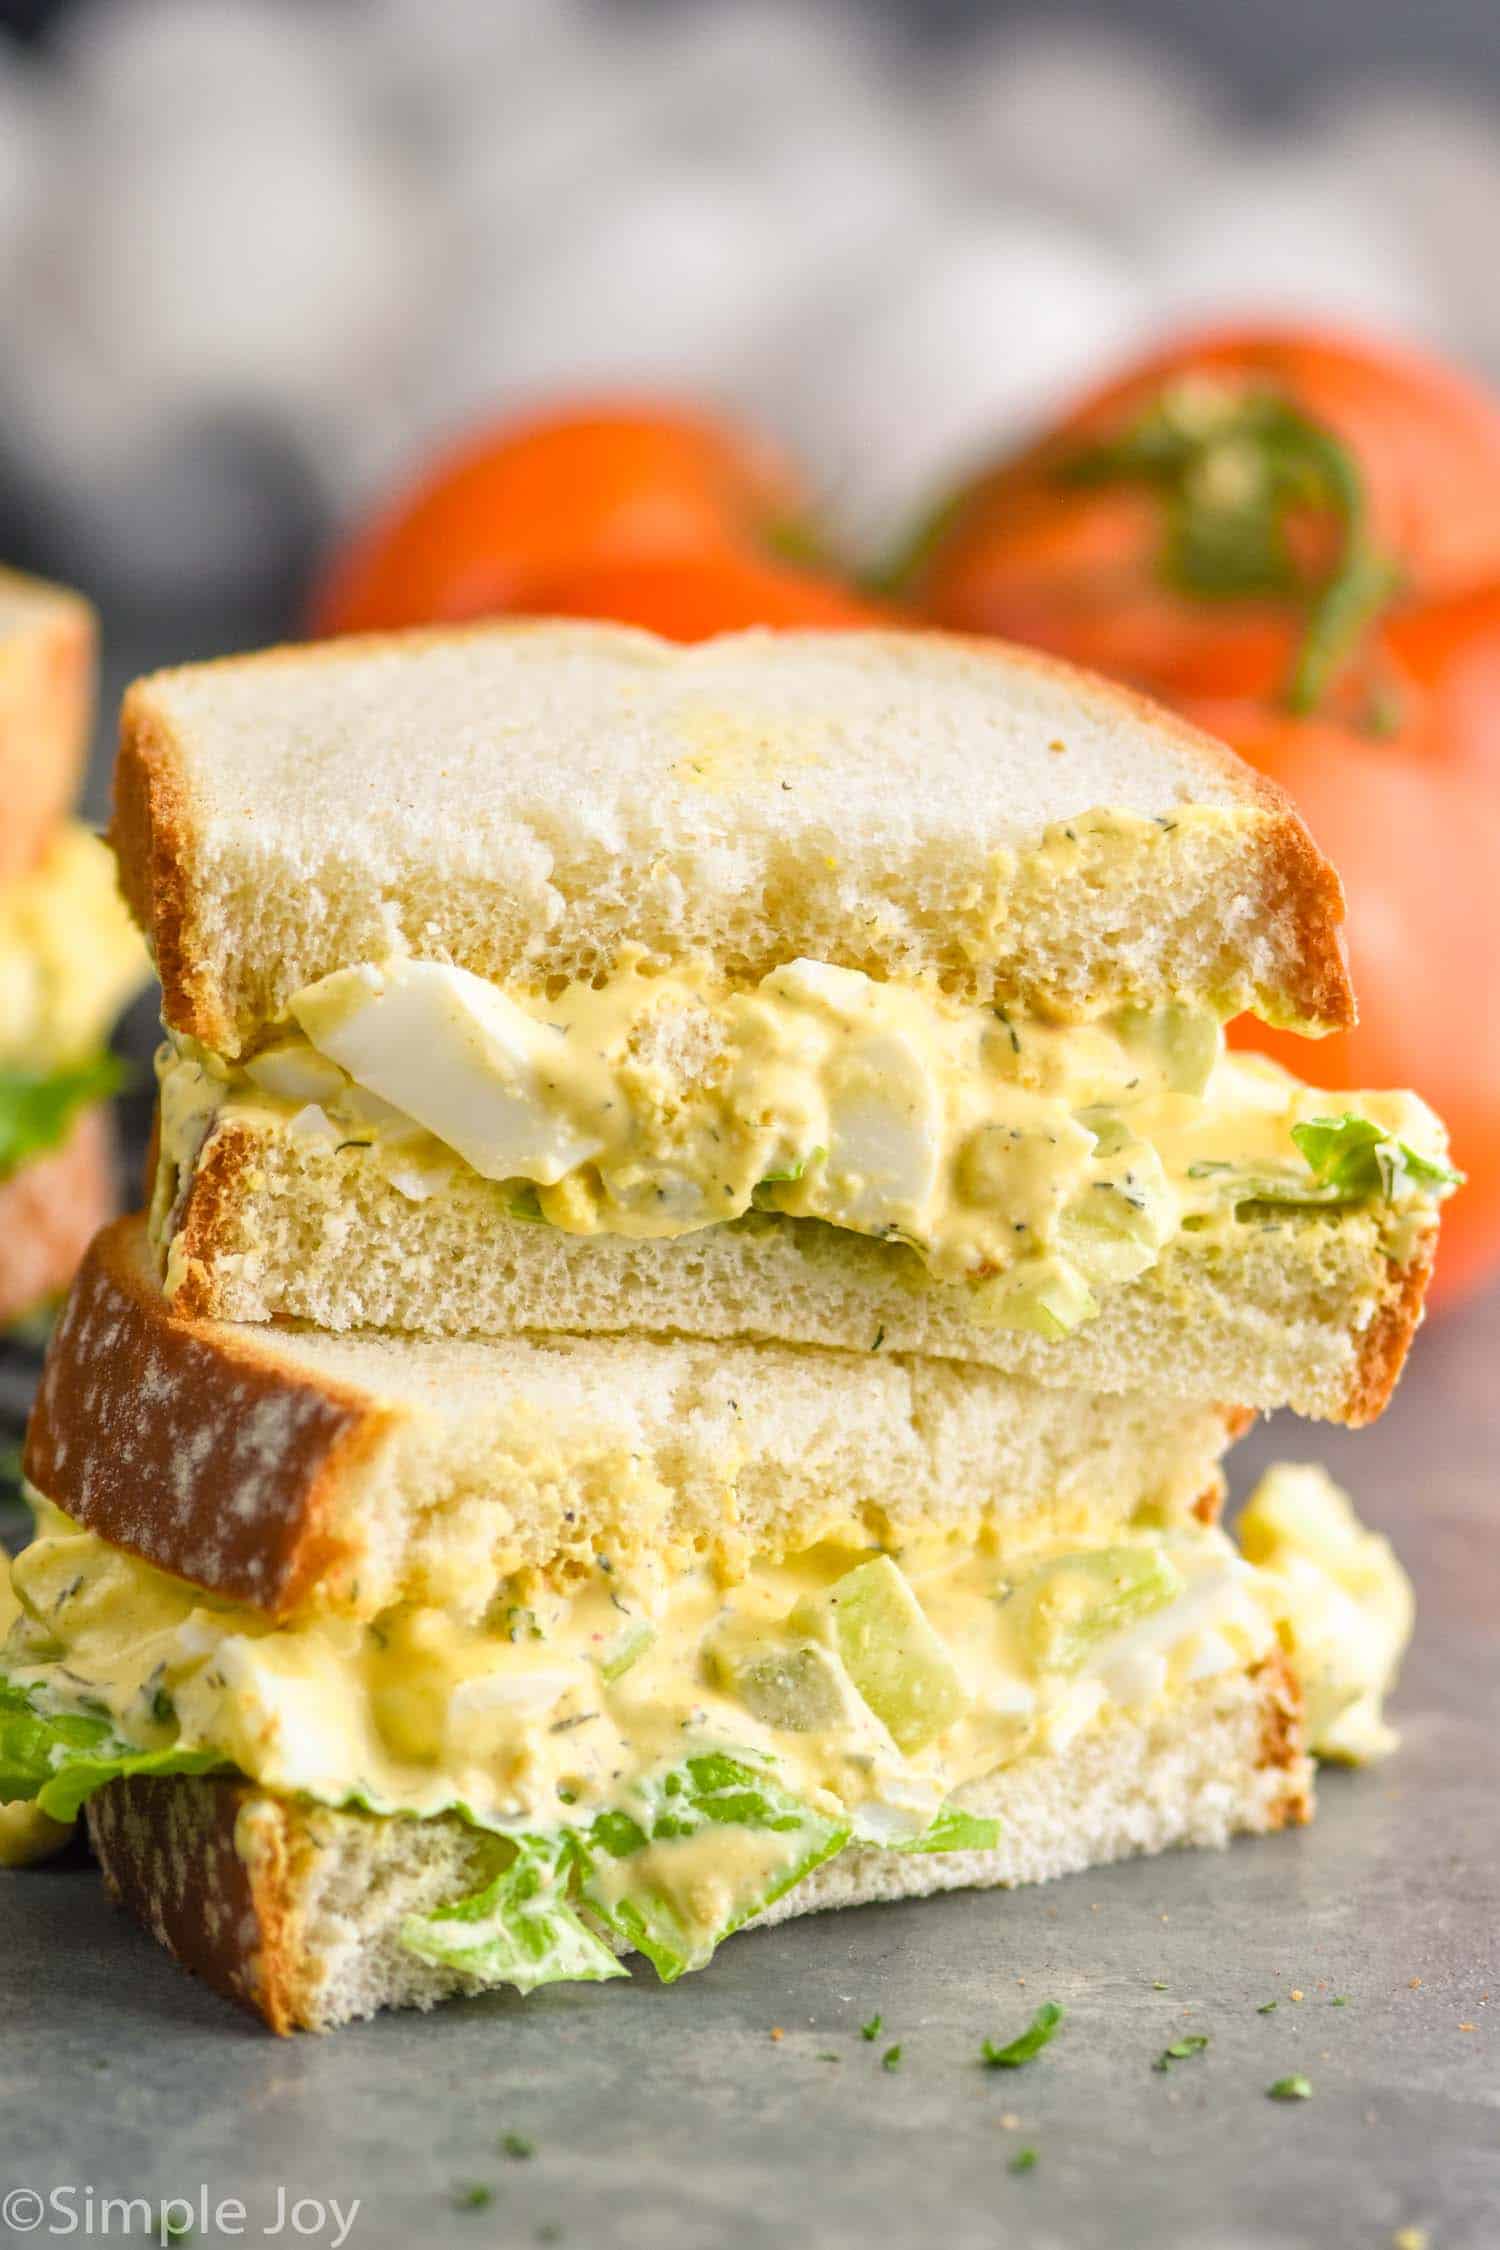 How to Make Egg Salad Sandwich